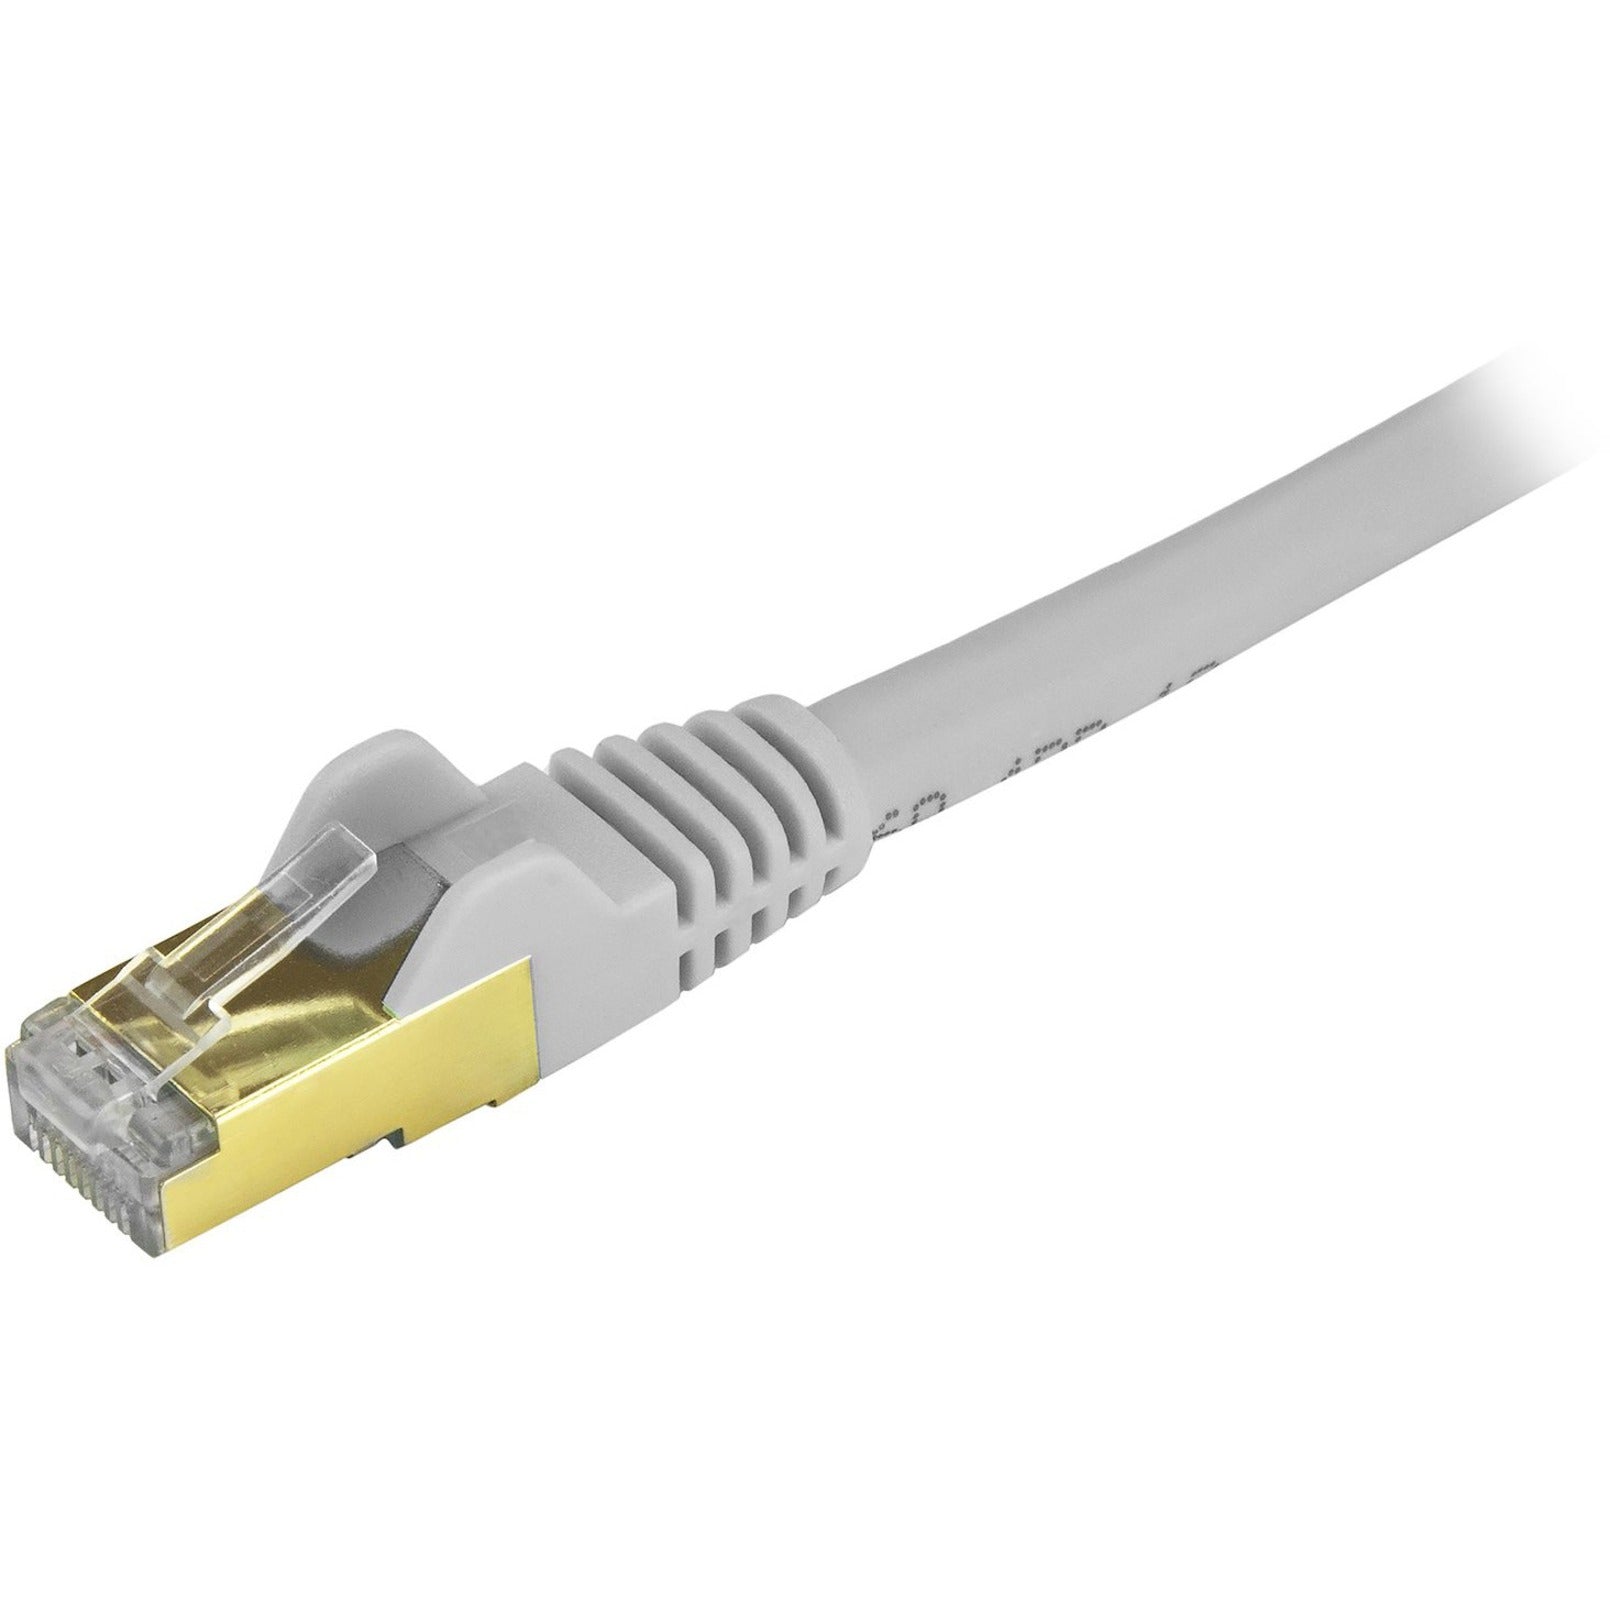 StarTech.com C6ASPAT6INGR Cat6a Ethernet Patch Cable - Shielded (STP) - 6 in., Gray, Short Ethernet Cord